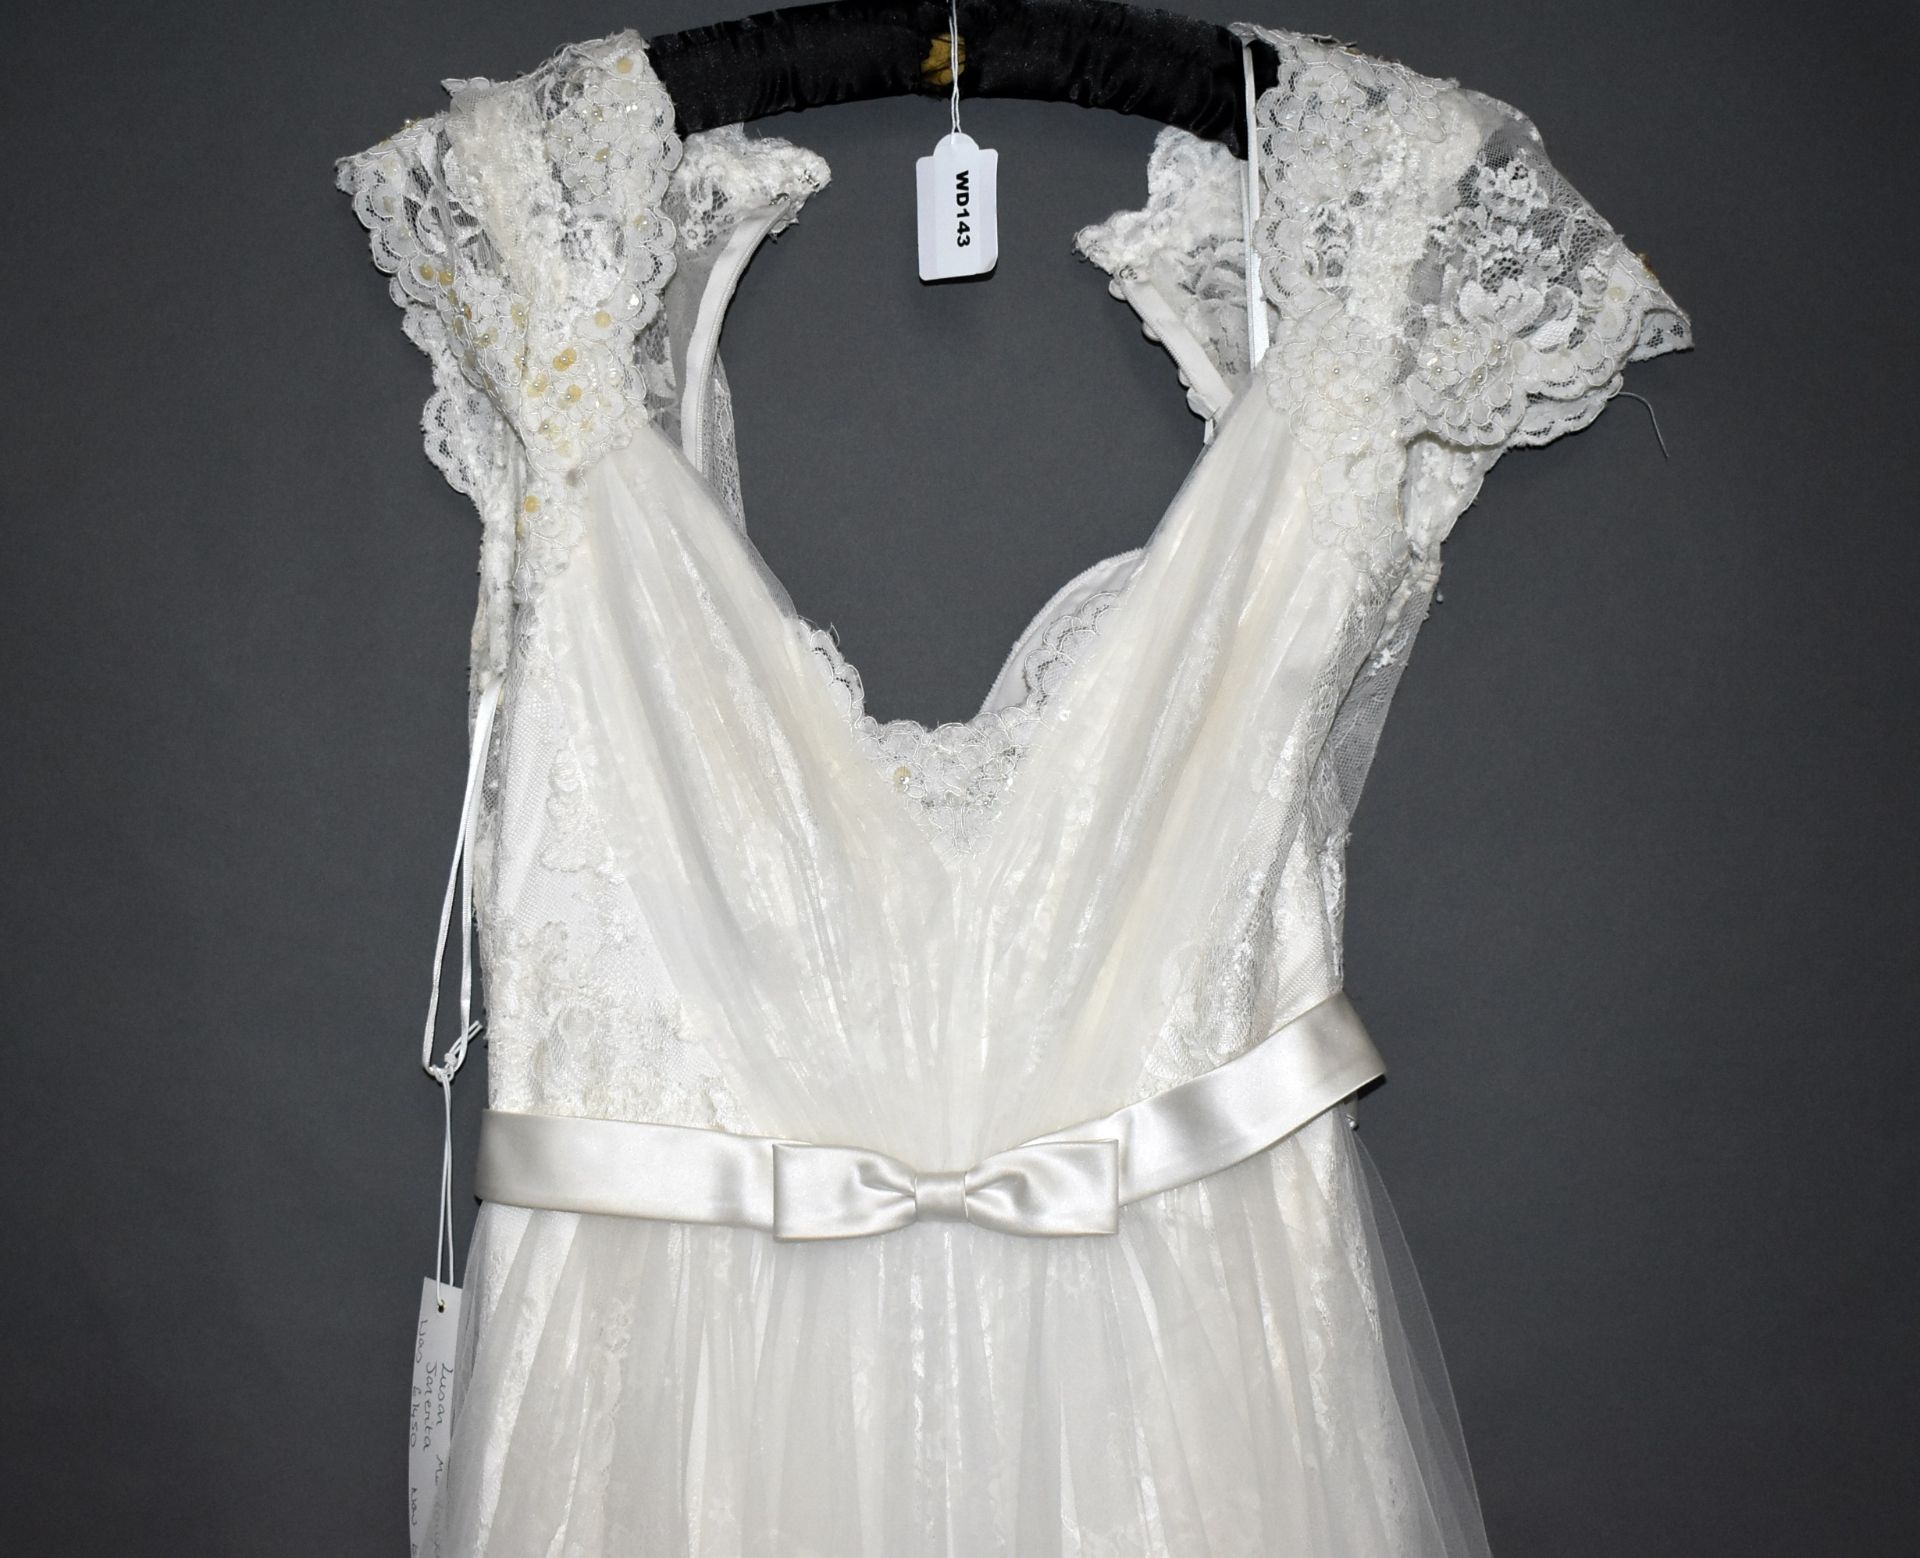 1 x LUSAN MANDONGUS Lace And Chiffon Designer Wedding Dress Bridal Gown RRP £1,450 UK 12 - Image 4 of 6